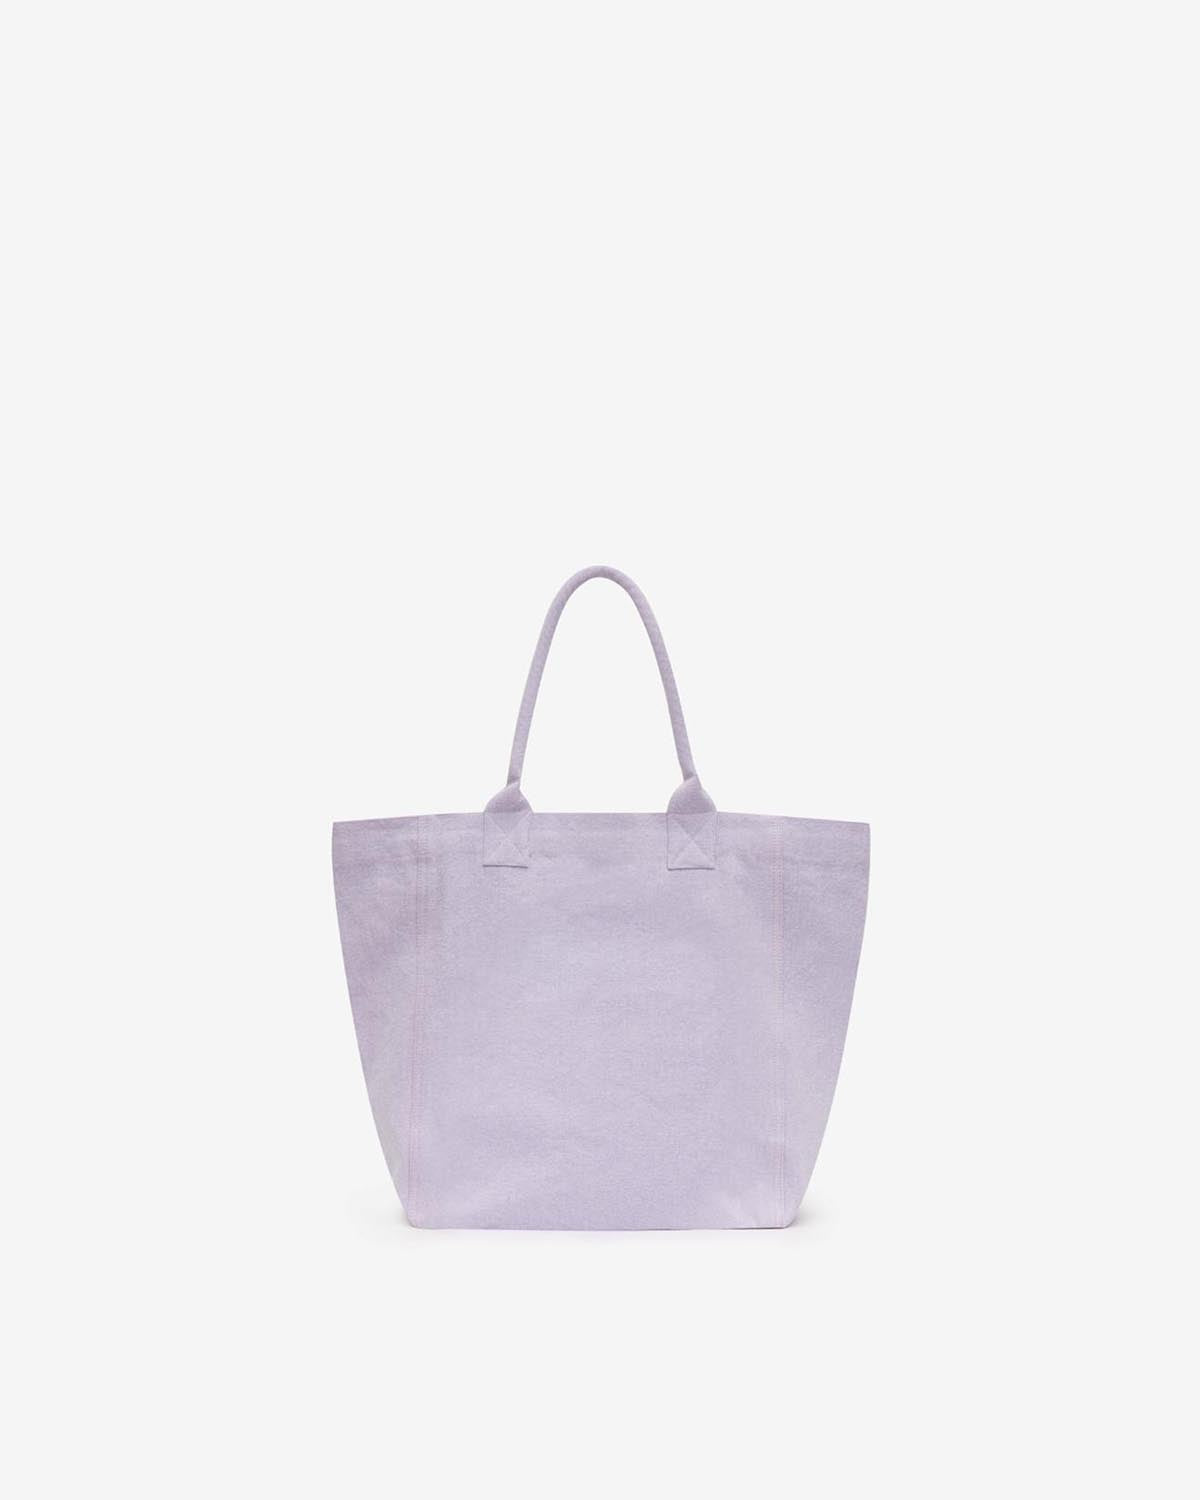 Yenky small bag Woman Lilac 2